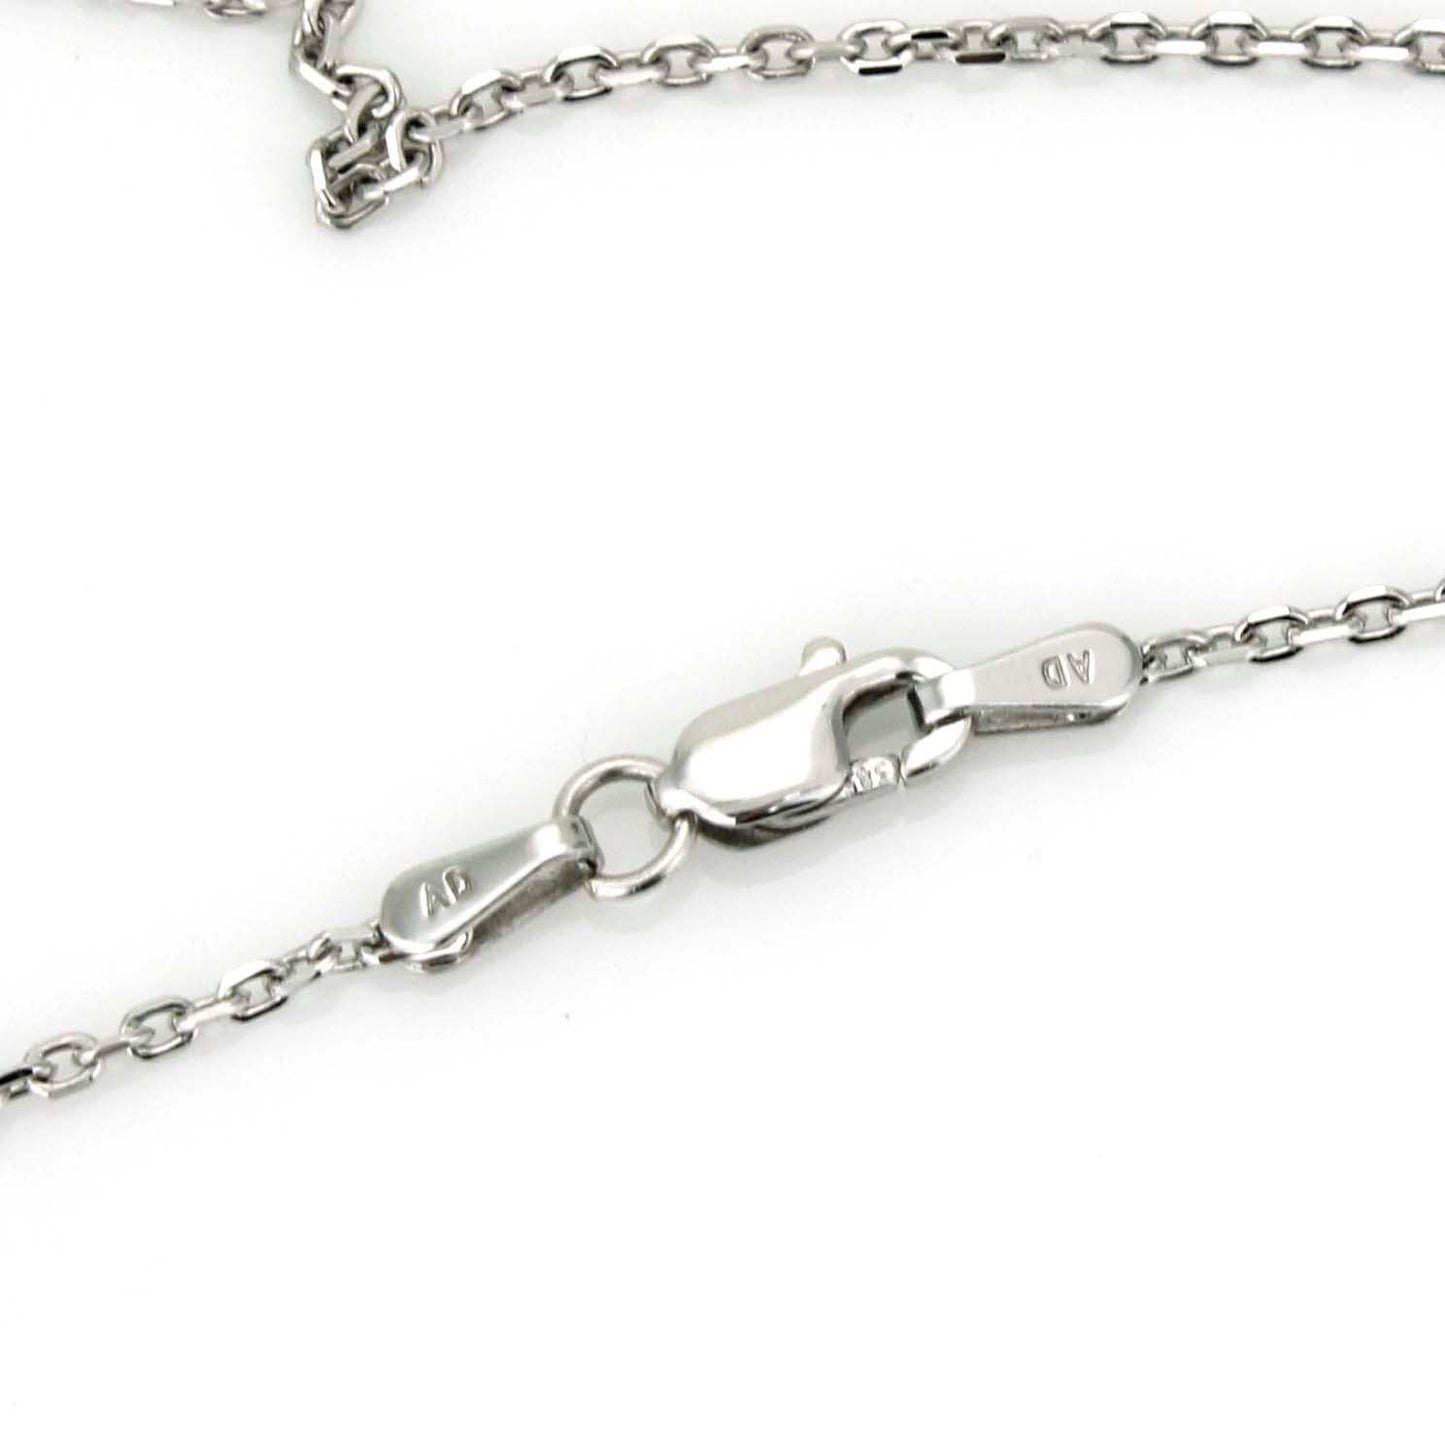 Women's Diamond Heart Pendant Necklace in 14k White Gold - 31 Jewels Inc.